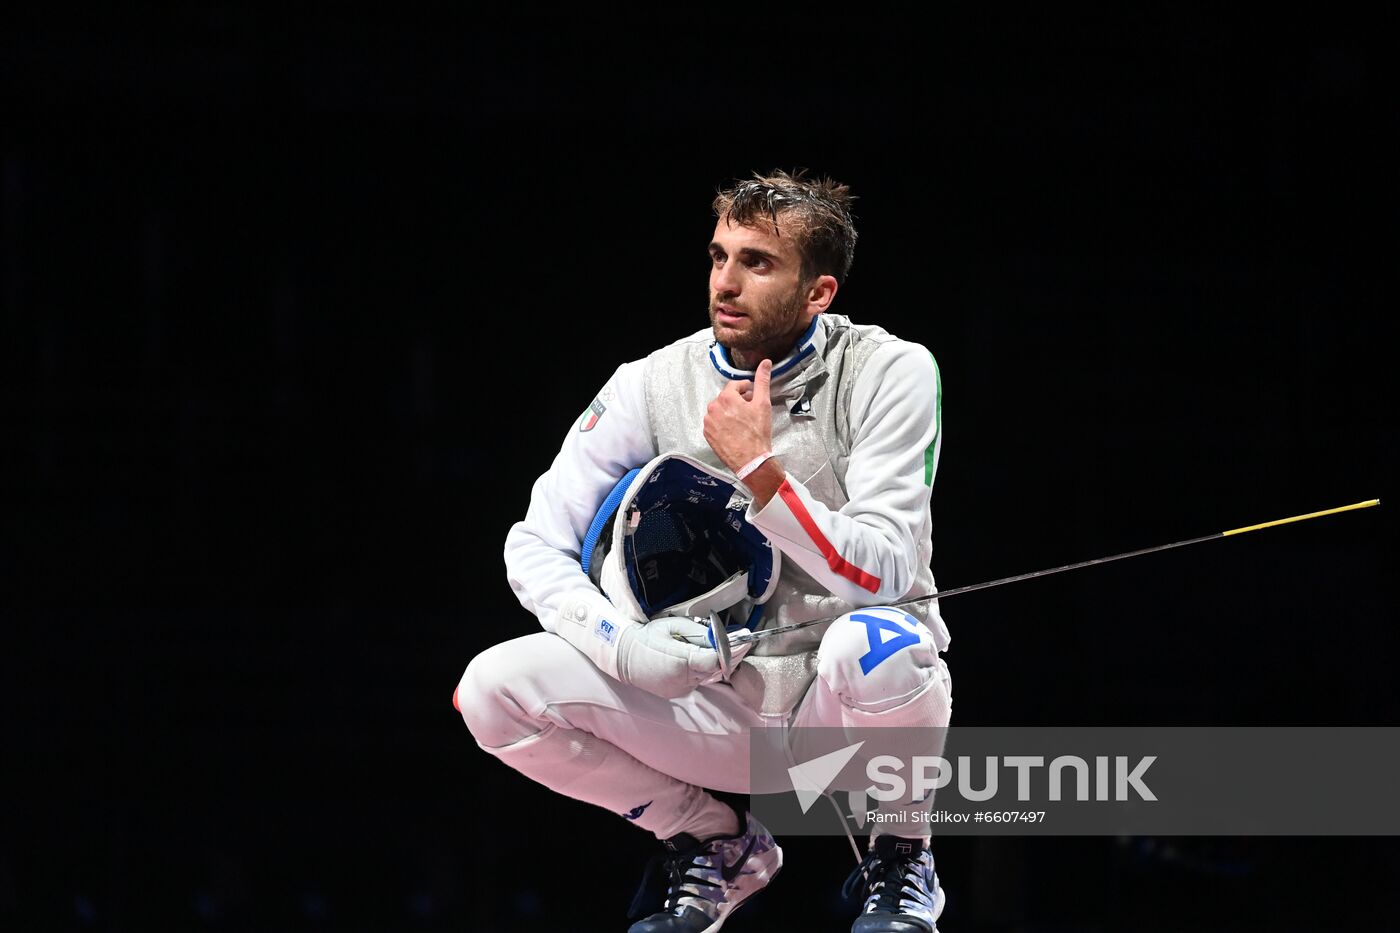 Japan Olympics 2020 Fencing Men Foil